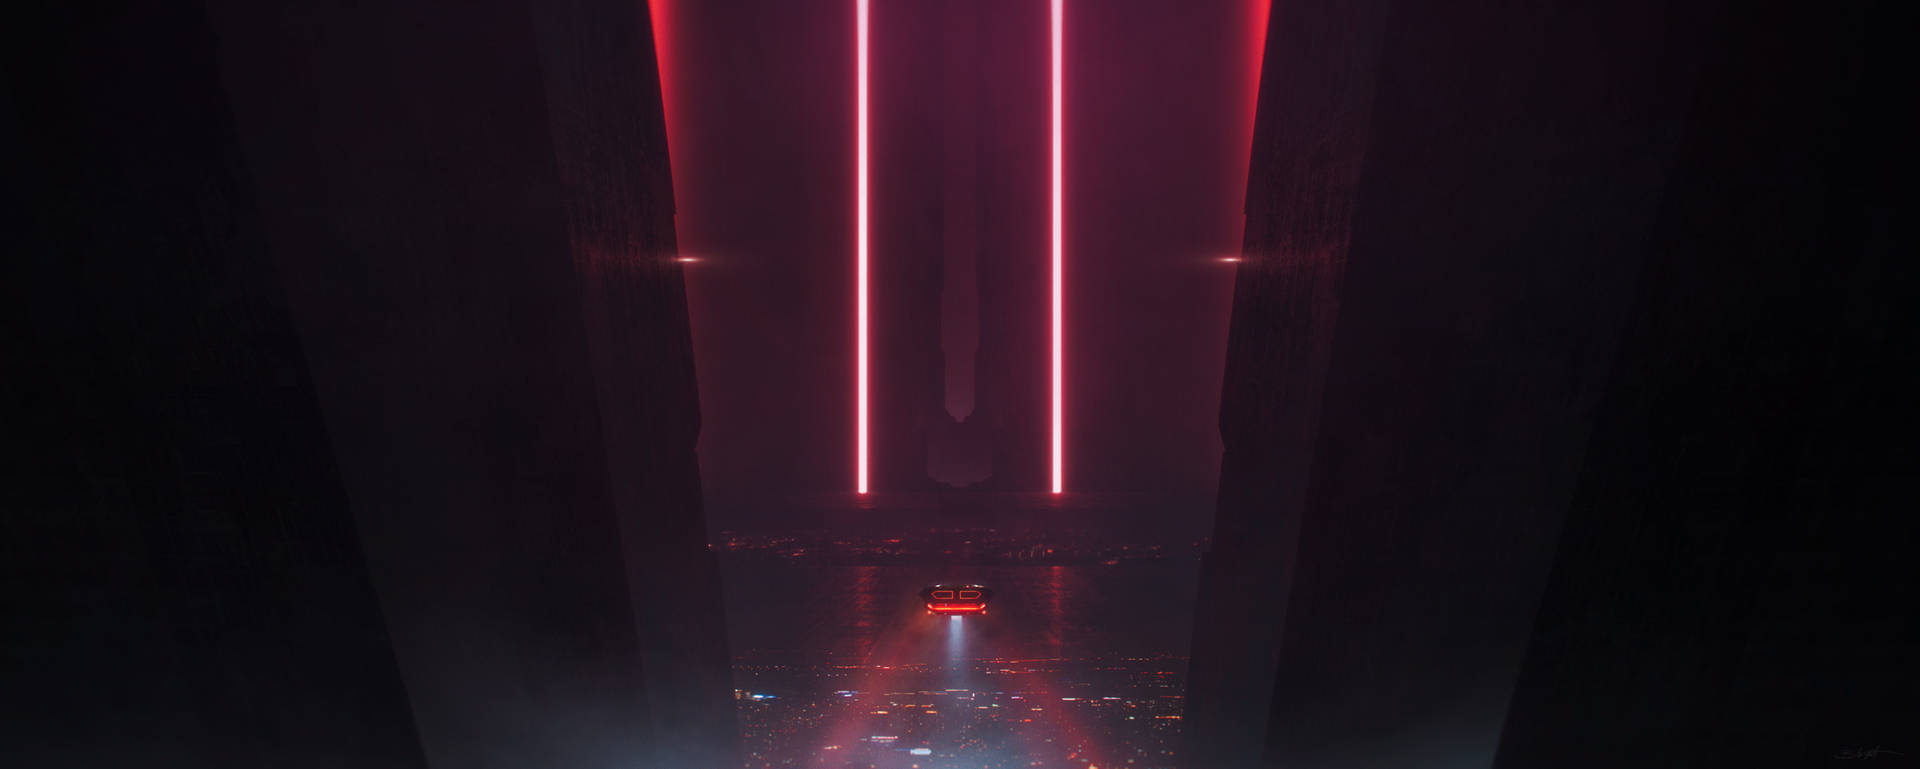 Red Lights Blade Runner 2049 4k Background